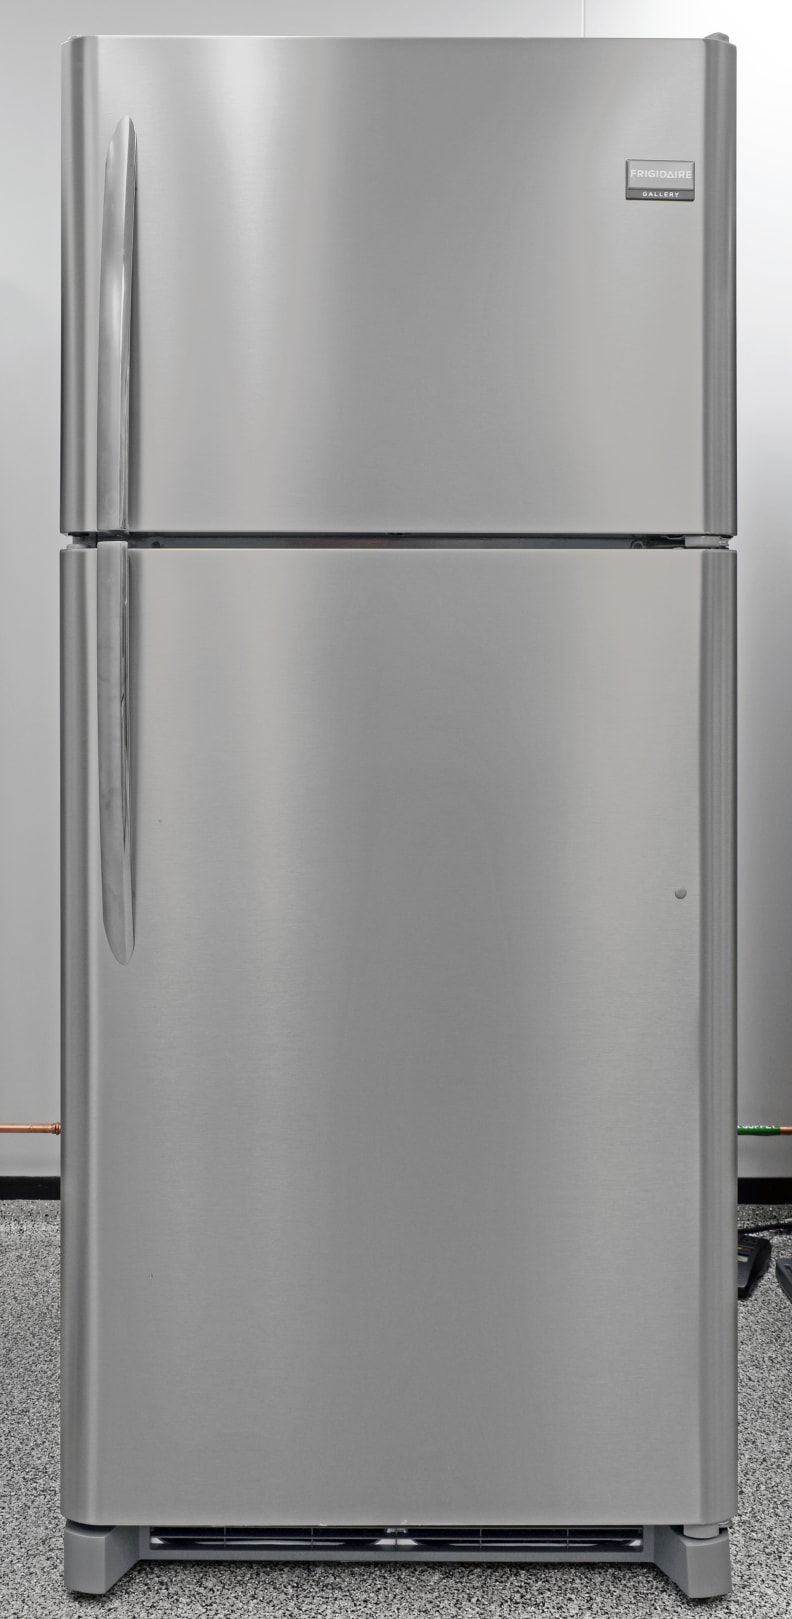 Frigidaire Gallery FGTR1845QF Refrigerator Review - Reviewed